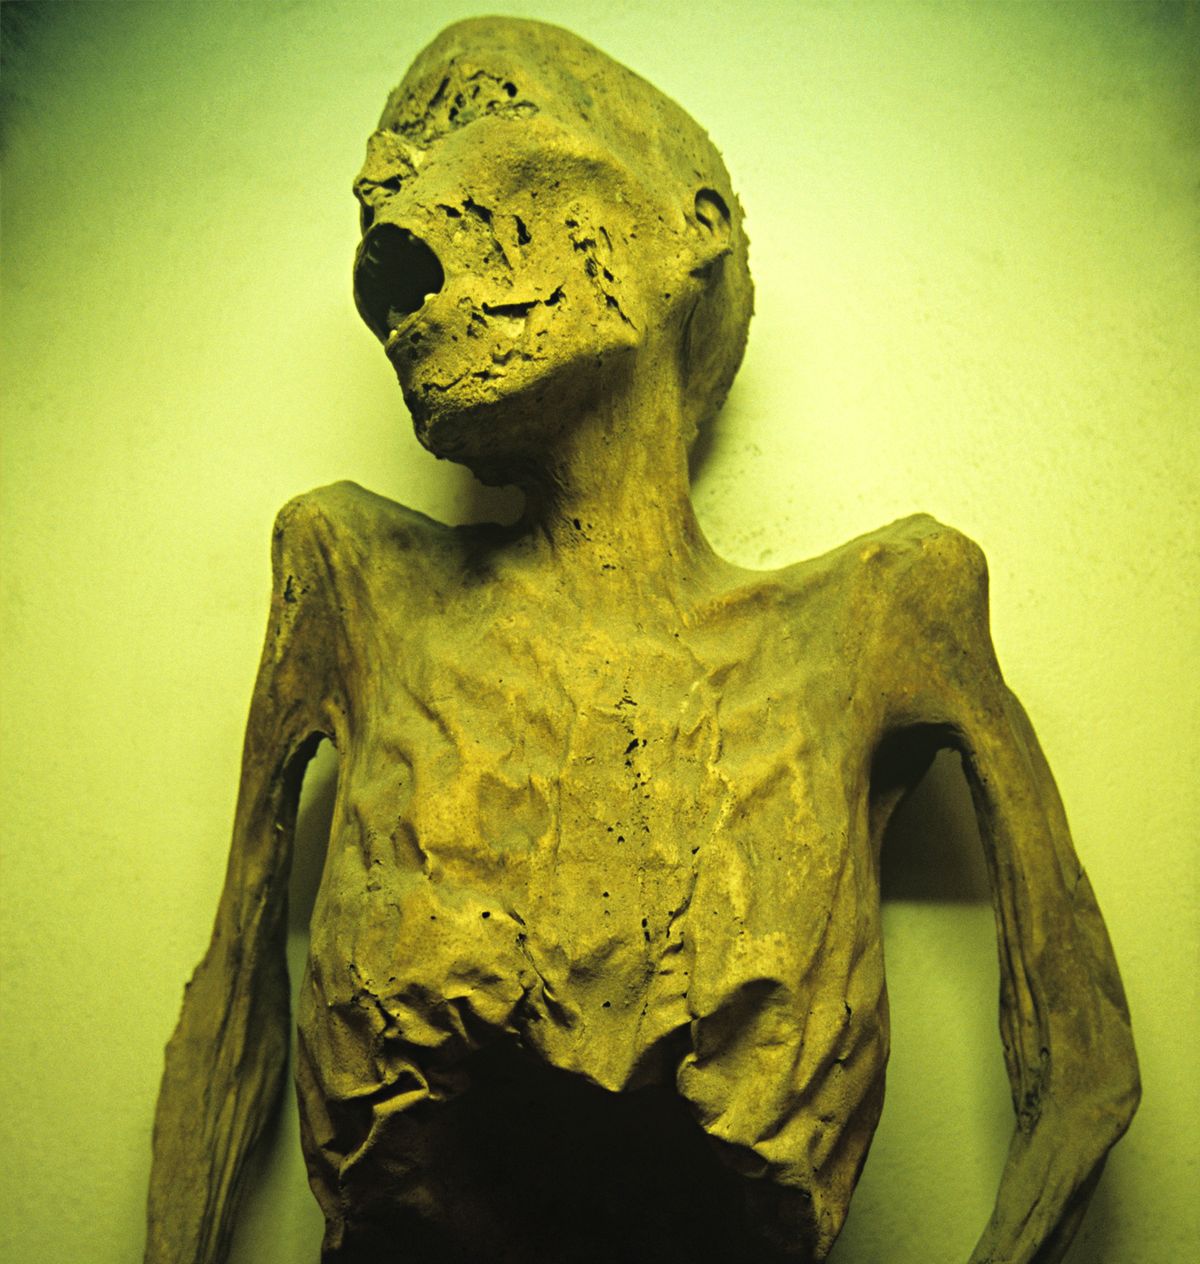 mummy-royalty-free-image-1683502857.jpg